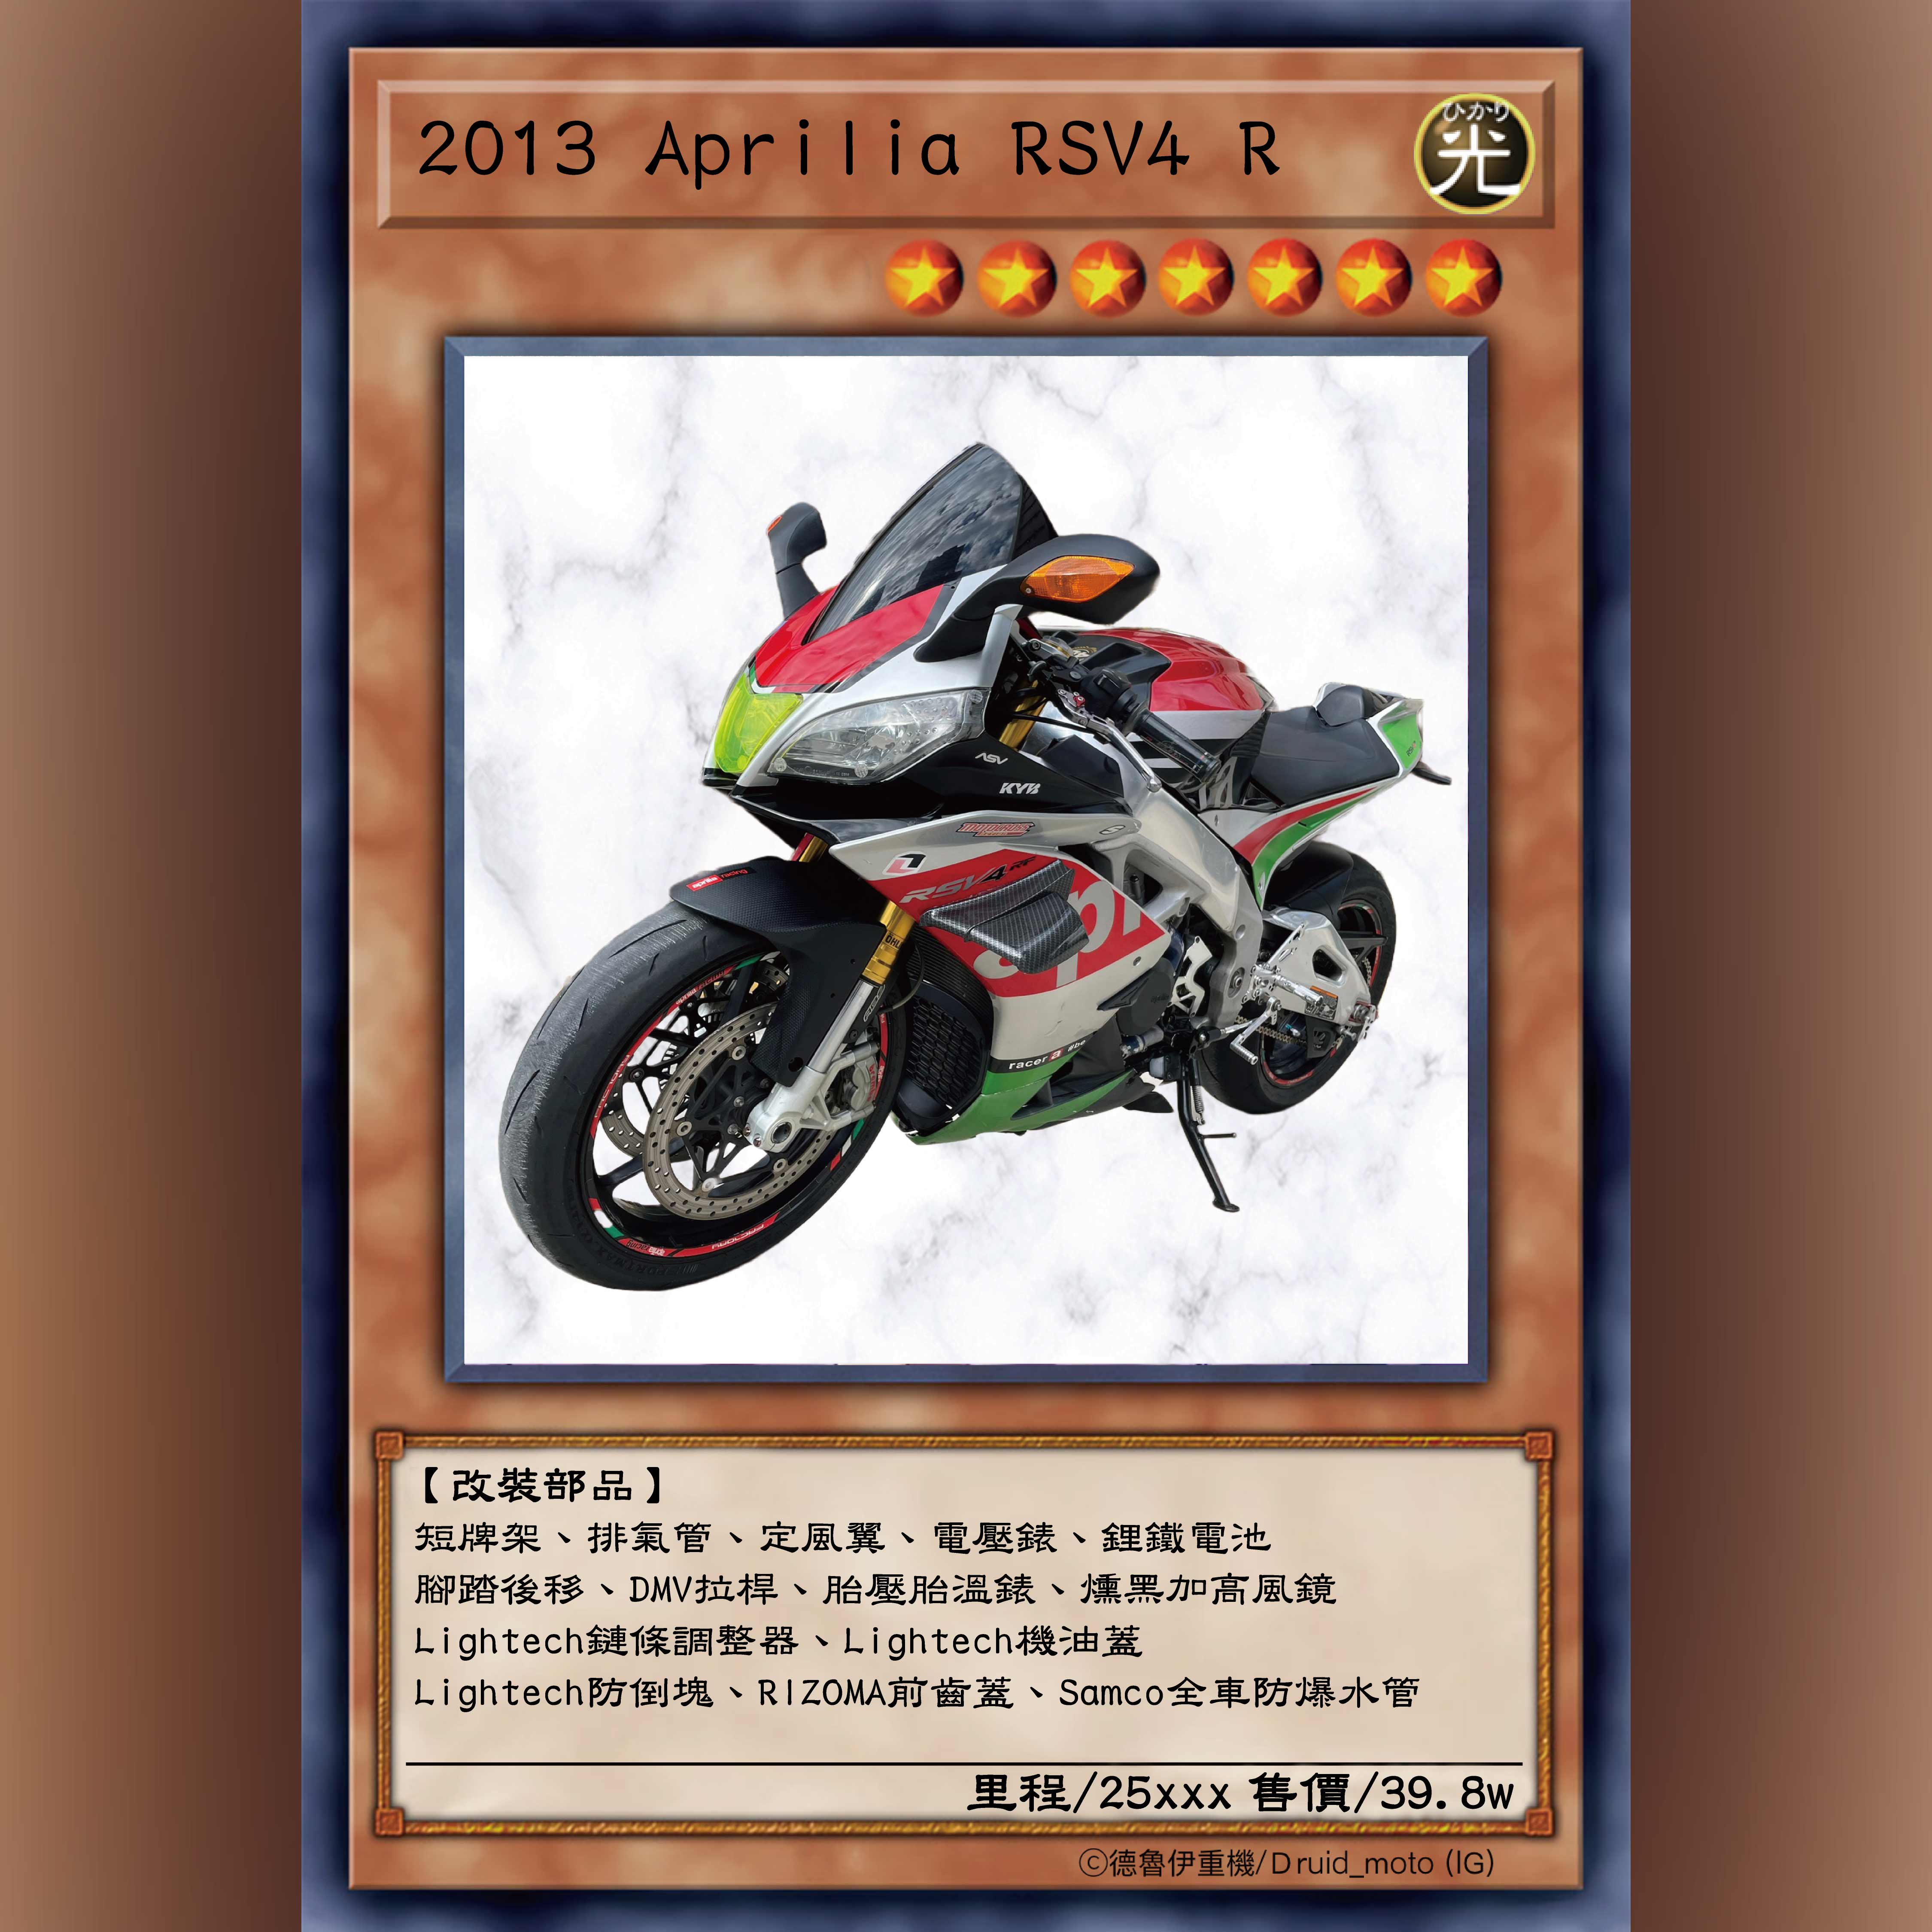 【德魯伊重機】APRILIA RSV4 - 「Webike-摩托車市」 Aprilia RSV4 R